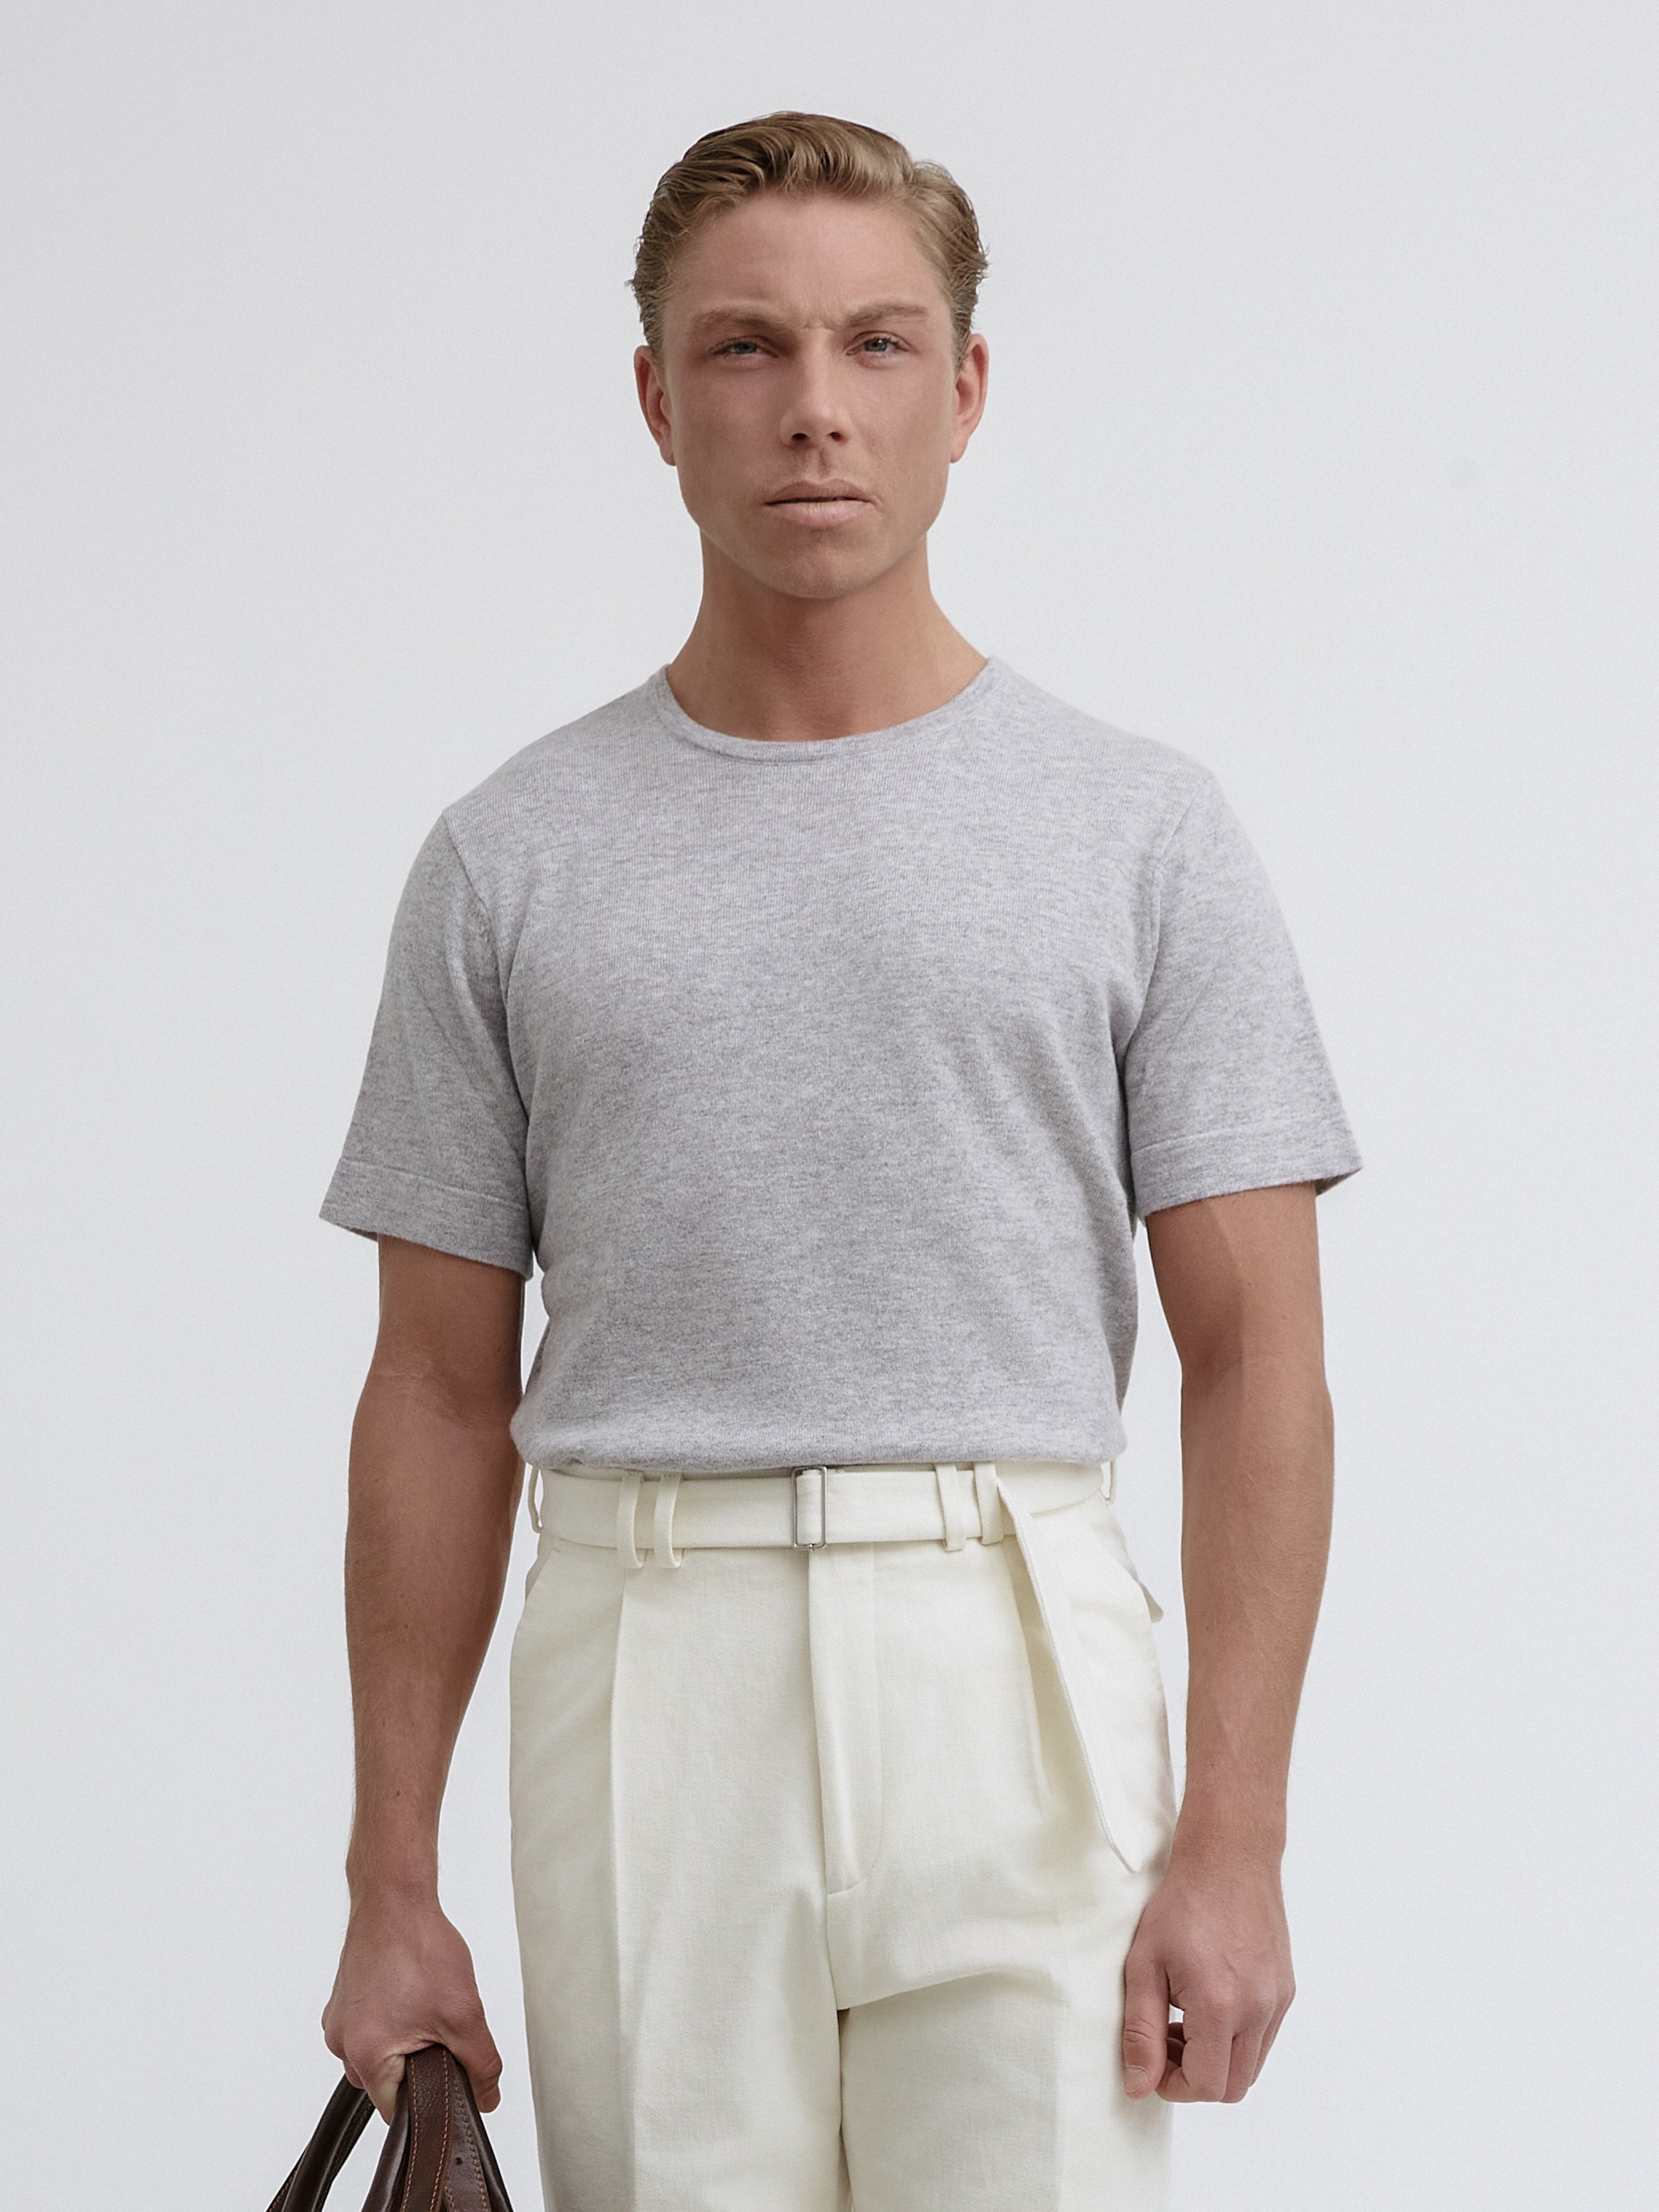 Grey Merino Wool Cashmere T-shirt - Grand Le Mar